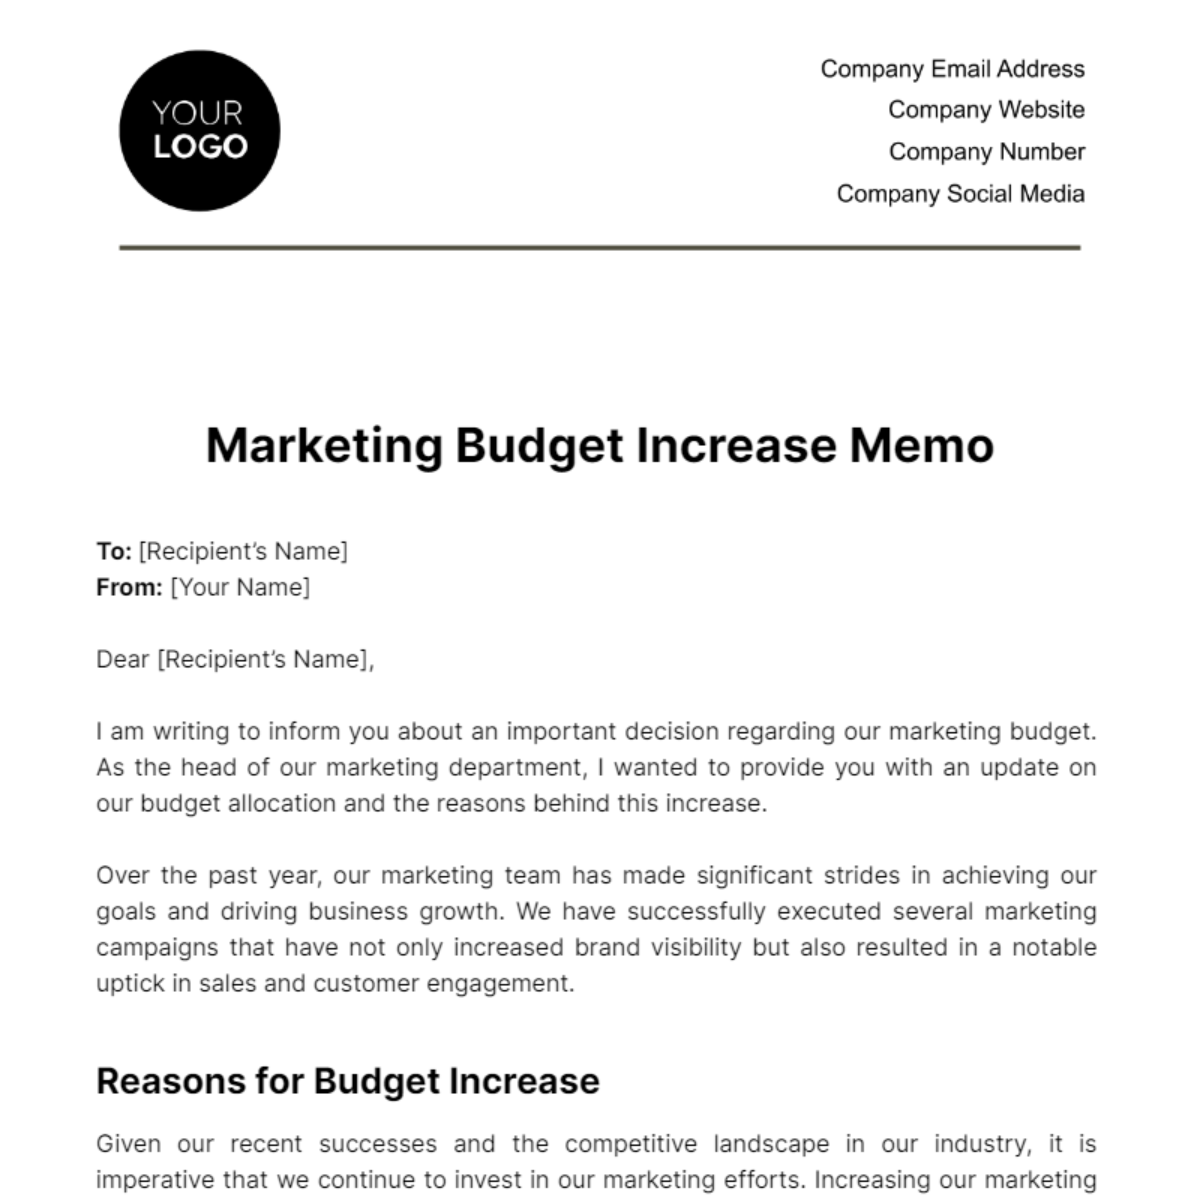 Marketing Budget Increase Memo Template